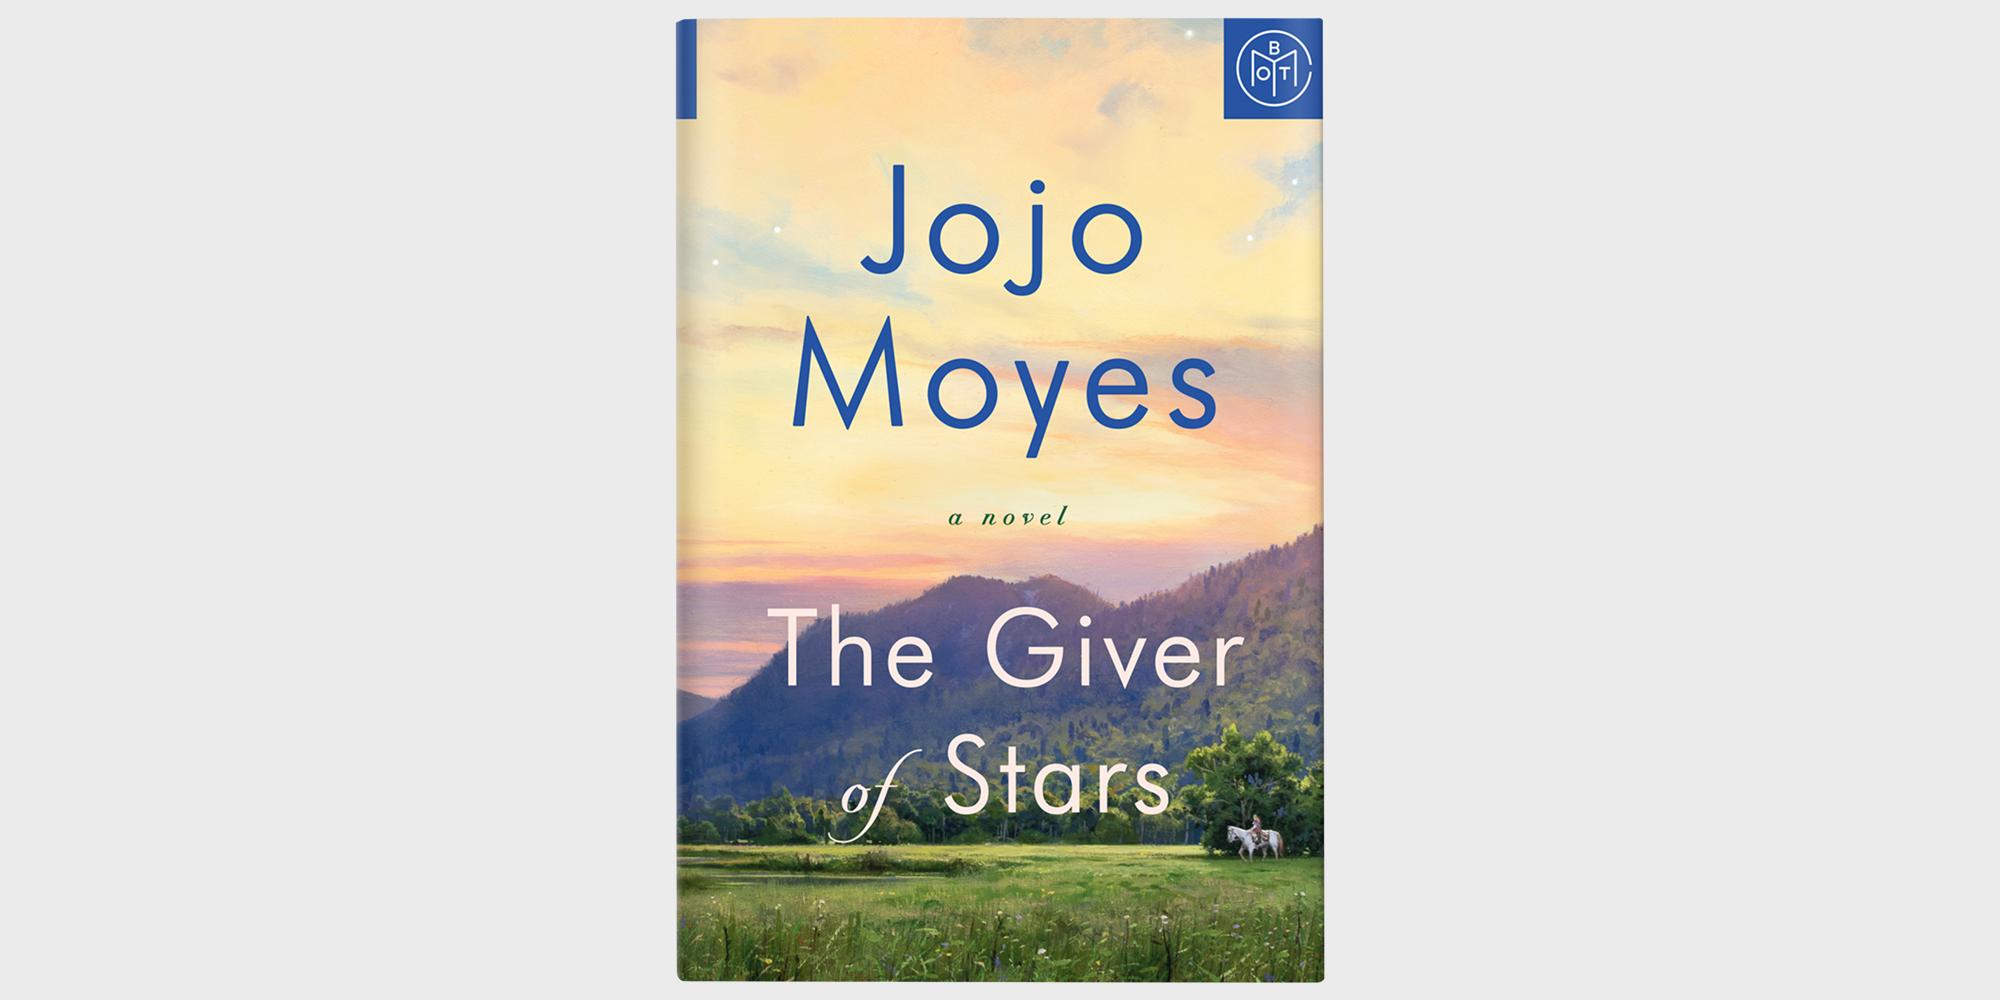 the giver of stars jojo moyes